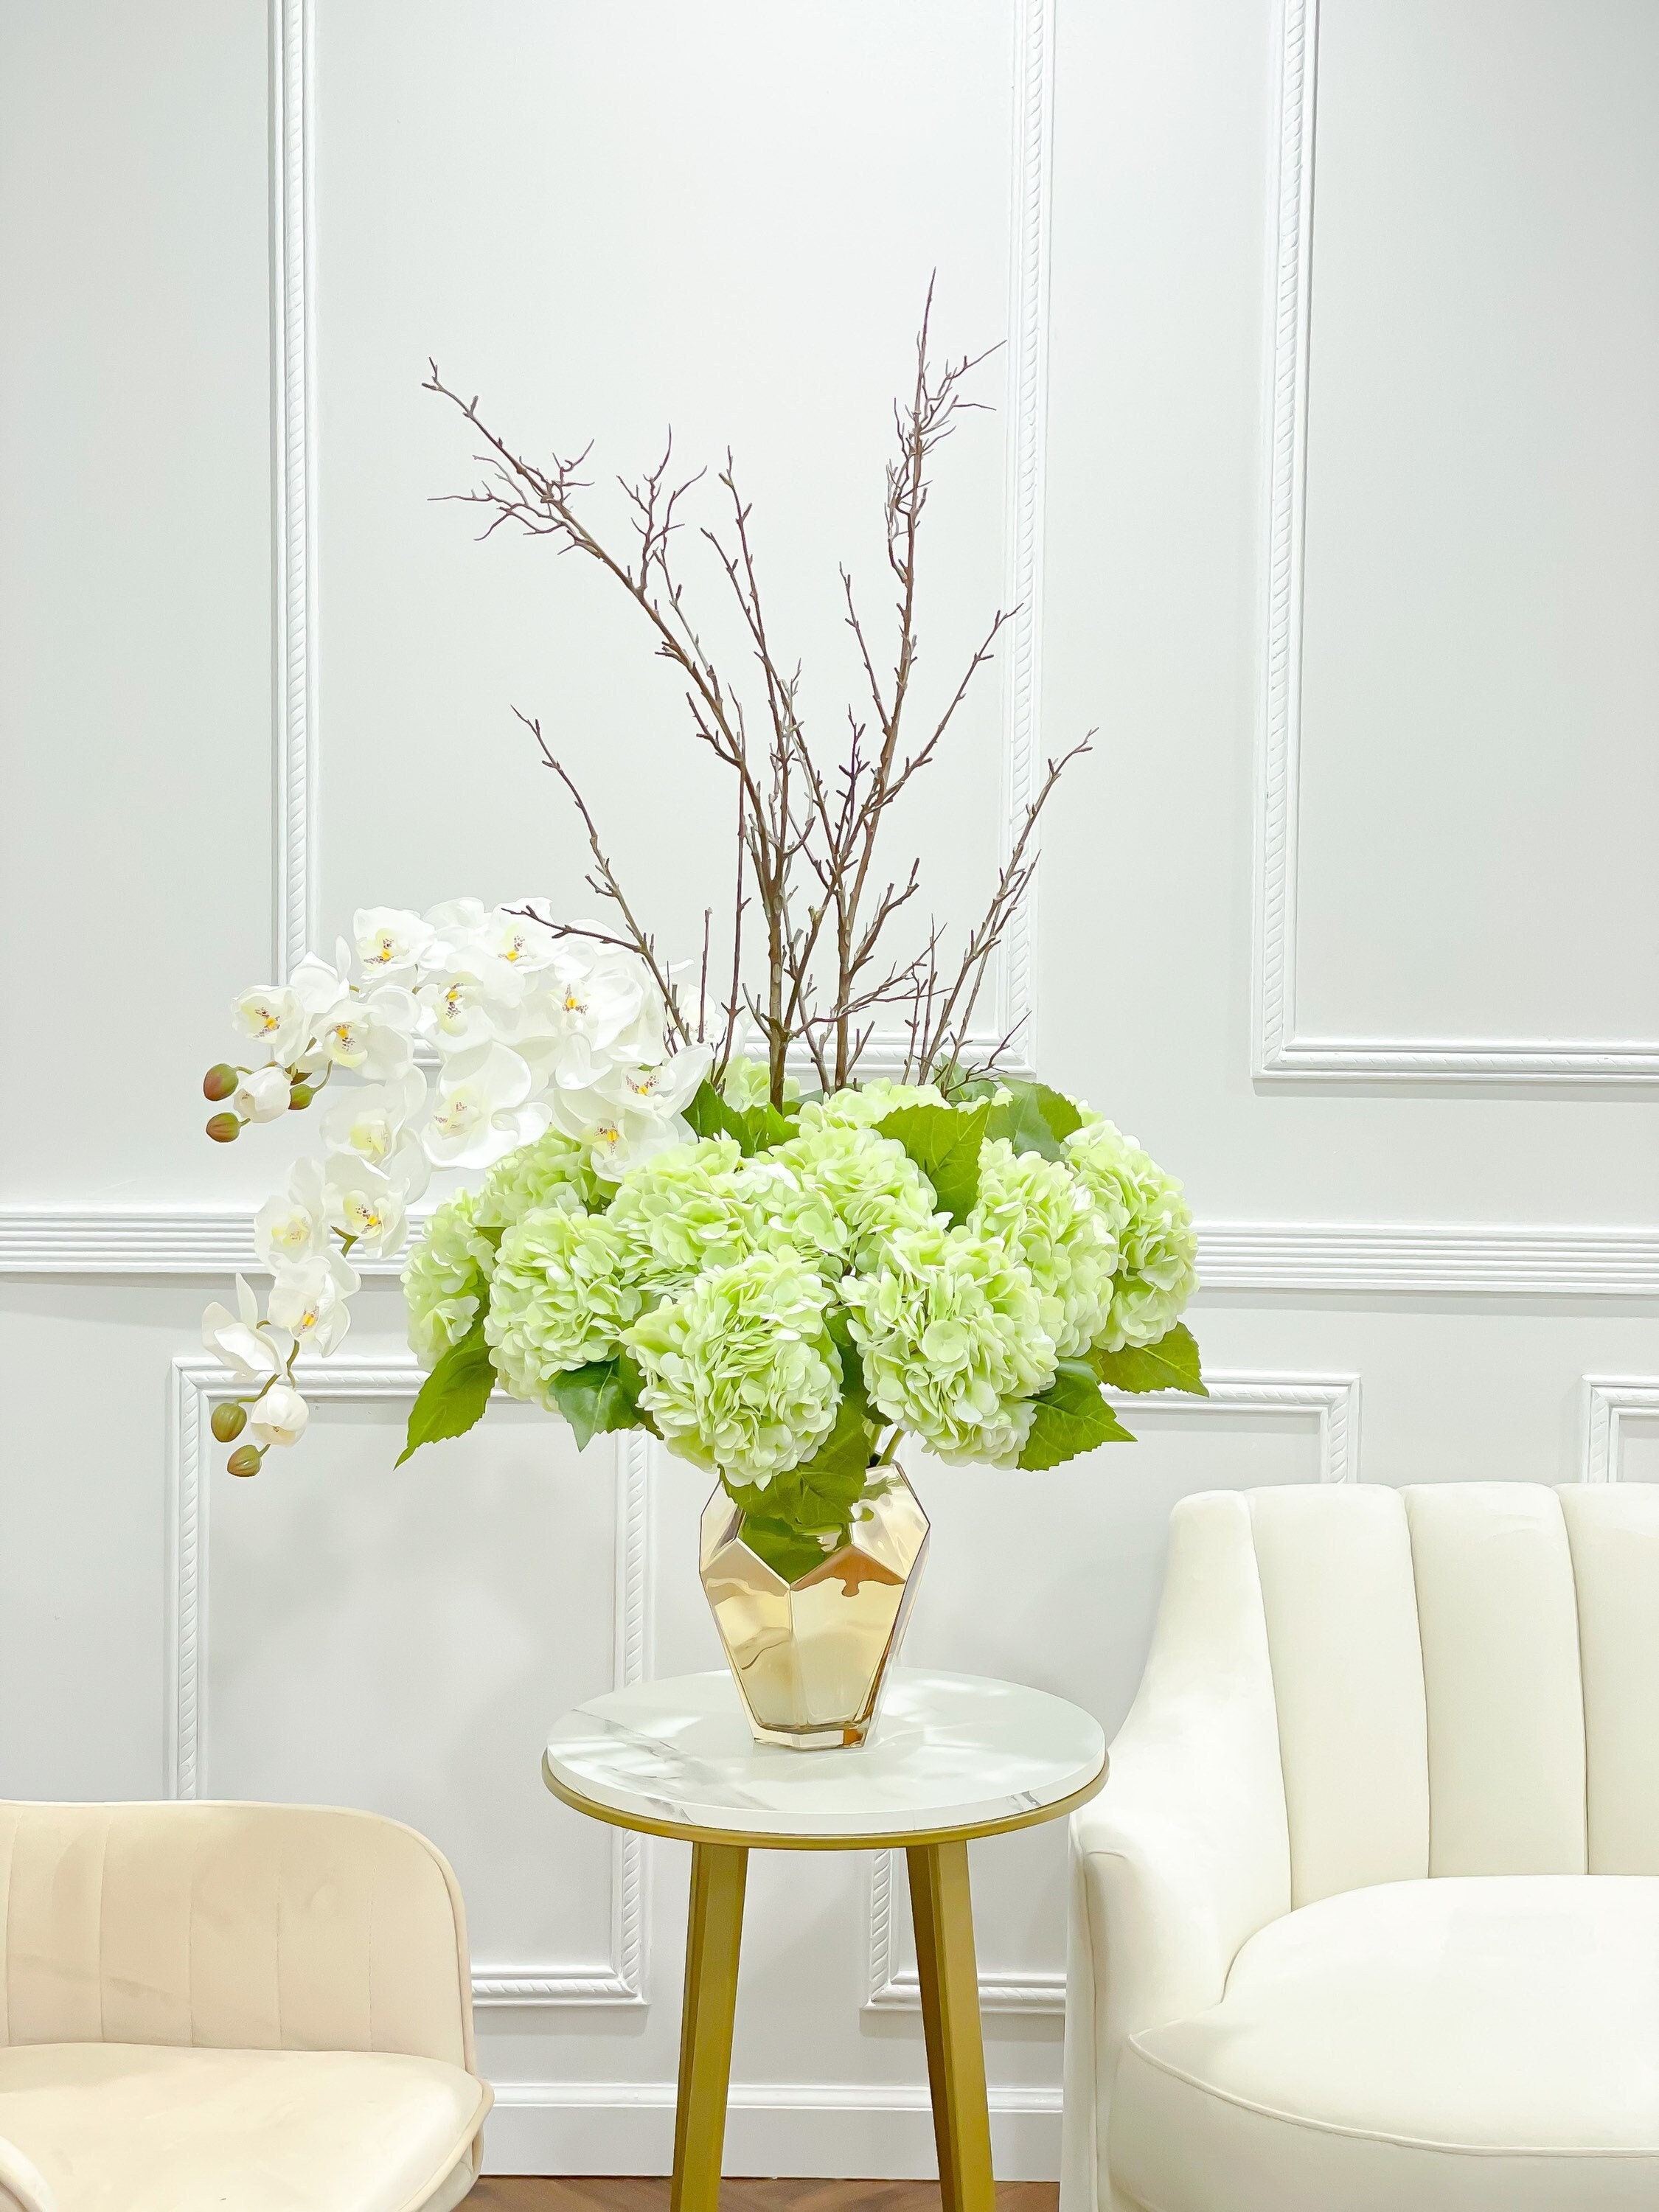 15 Elegant Flower Arrangements That'll Brighten up Any Room   Fall  flower arrangements, Hydrangea flower arrangements, Flower arrangements